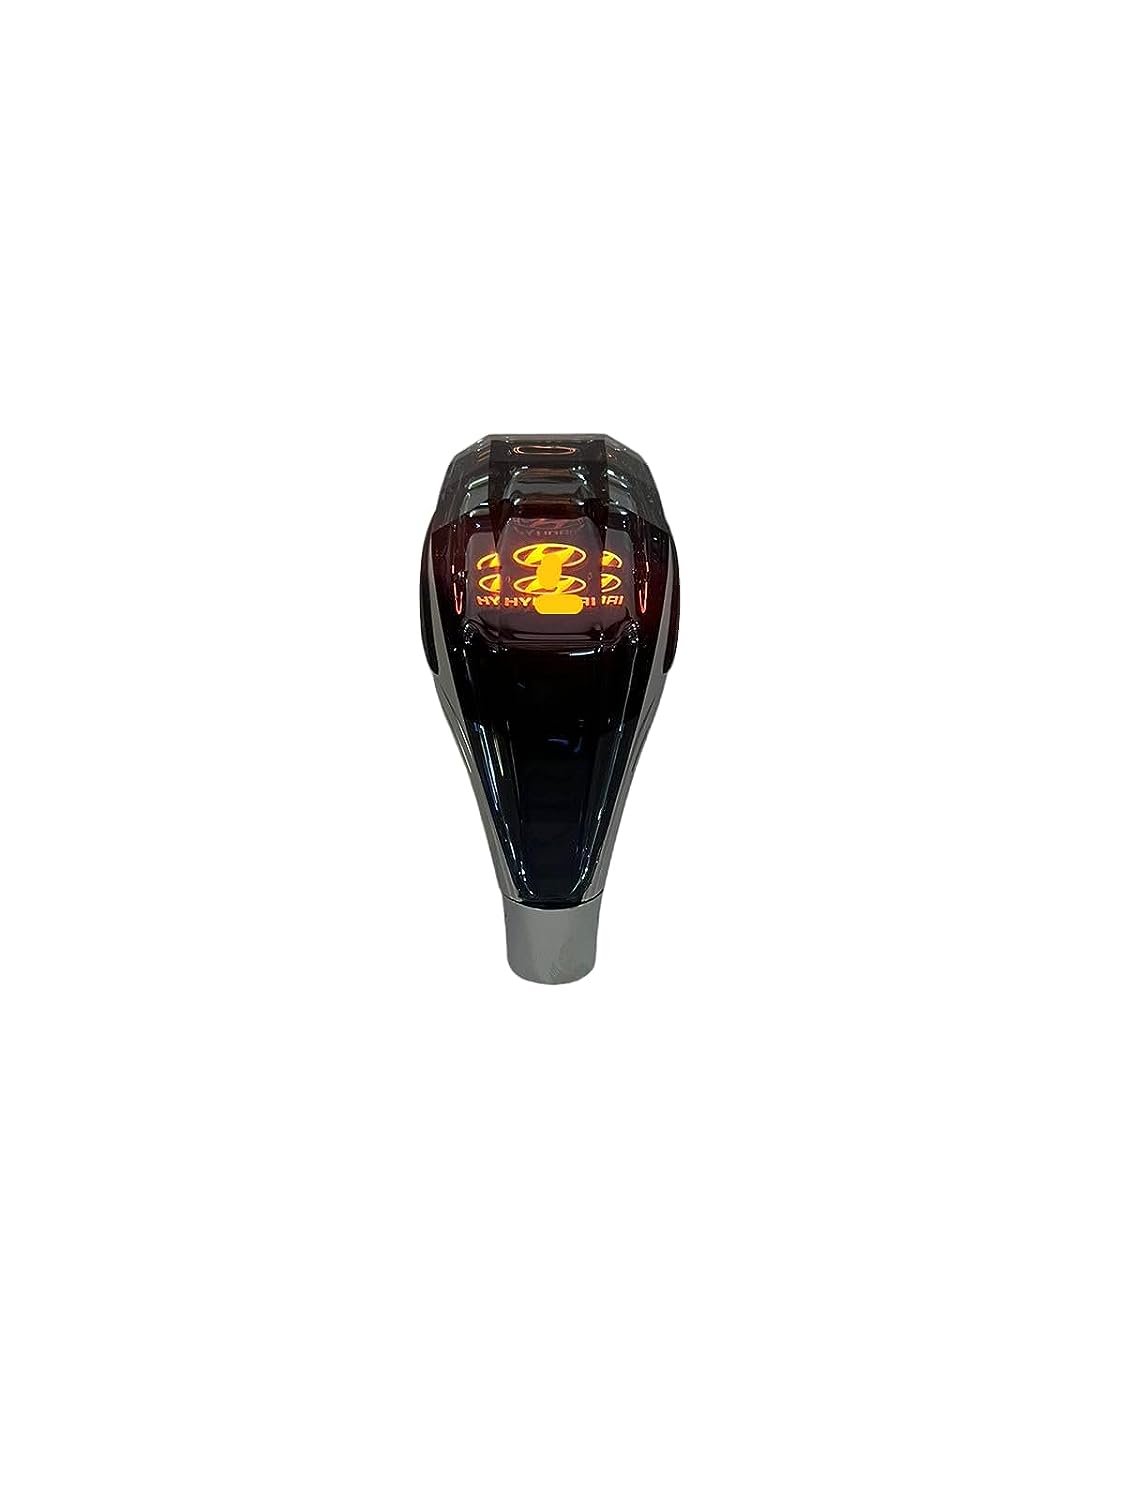 Crystal Shape Car LED Handball Crystal Shift Knob Shift Lever 7 Color Lights Illumination Touch Sensor Line Lighting Compatible with Hyun-DAI Car Image 